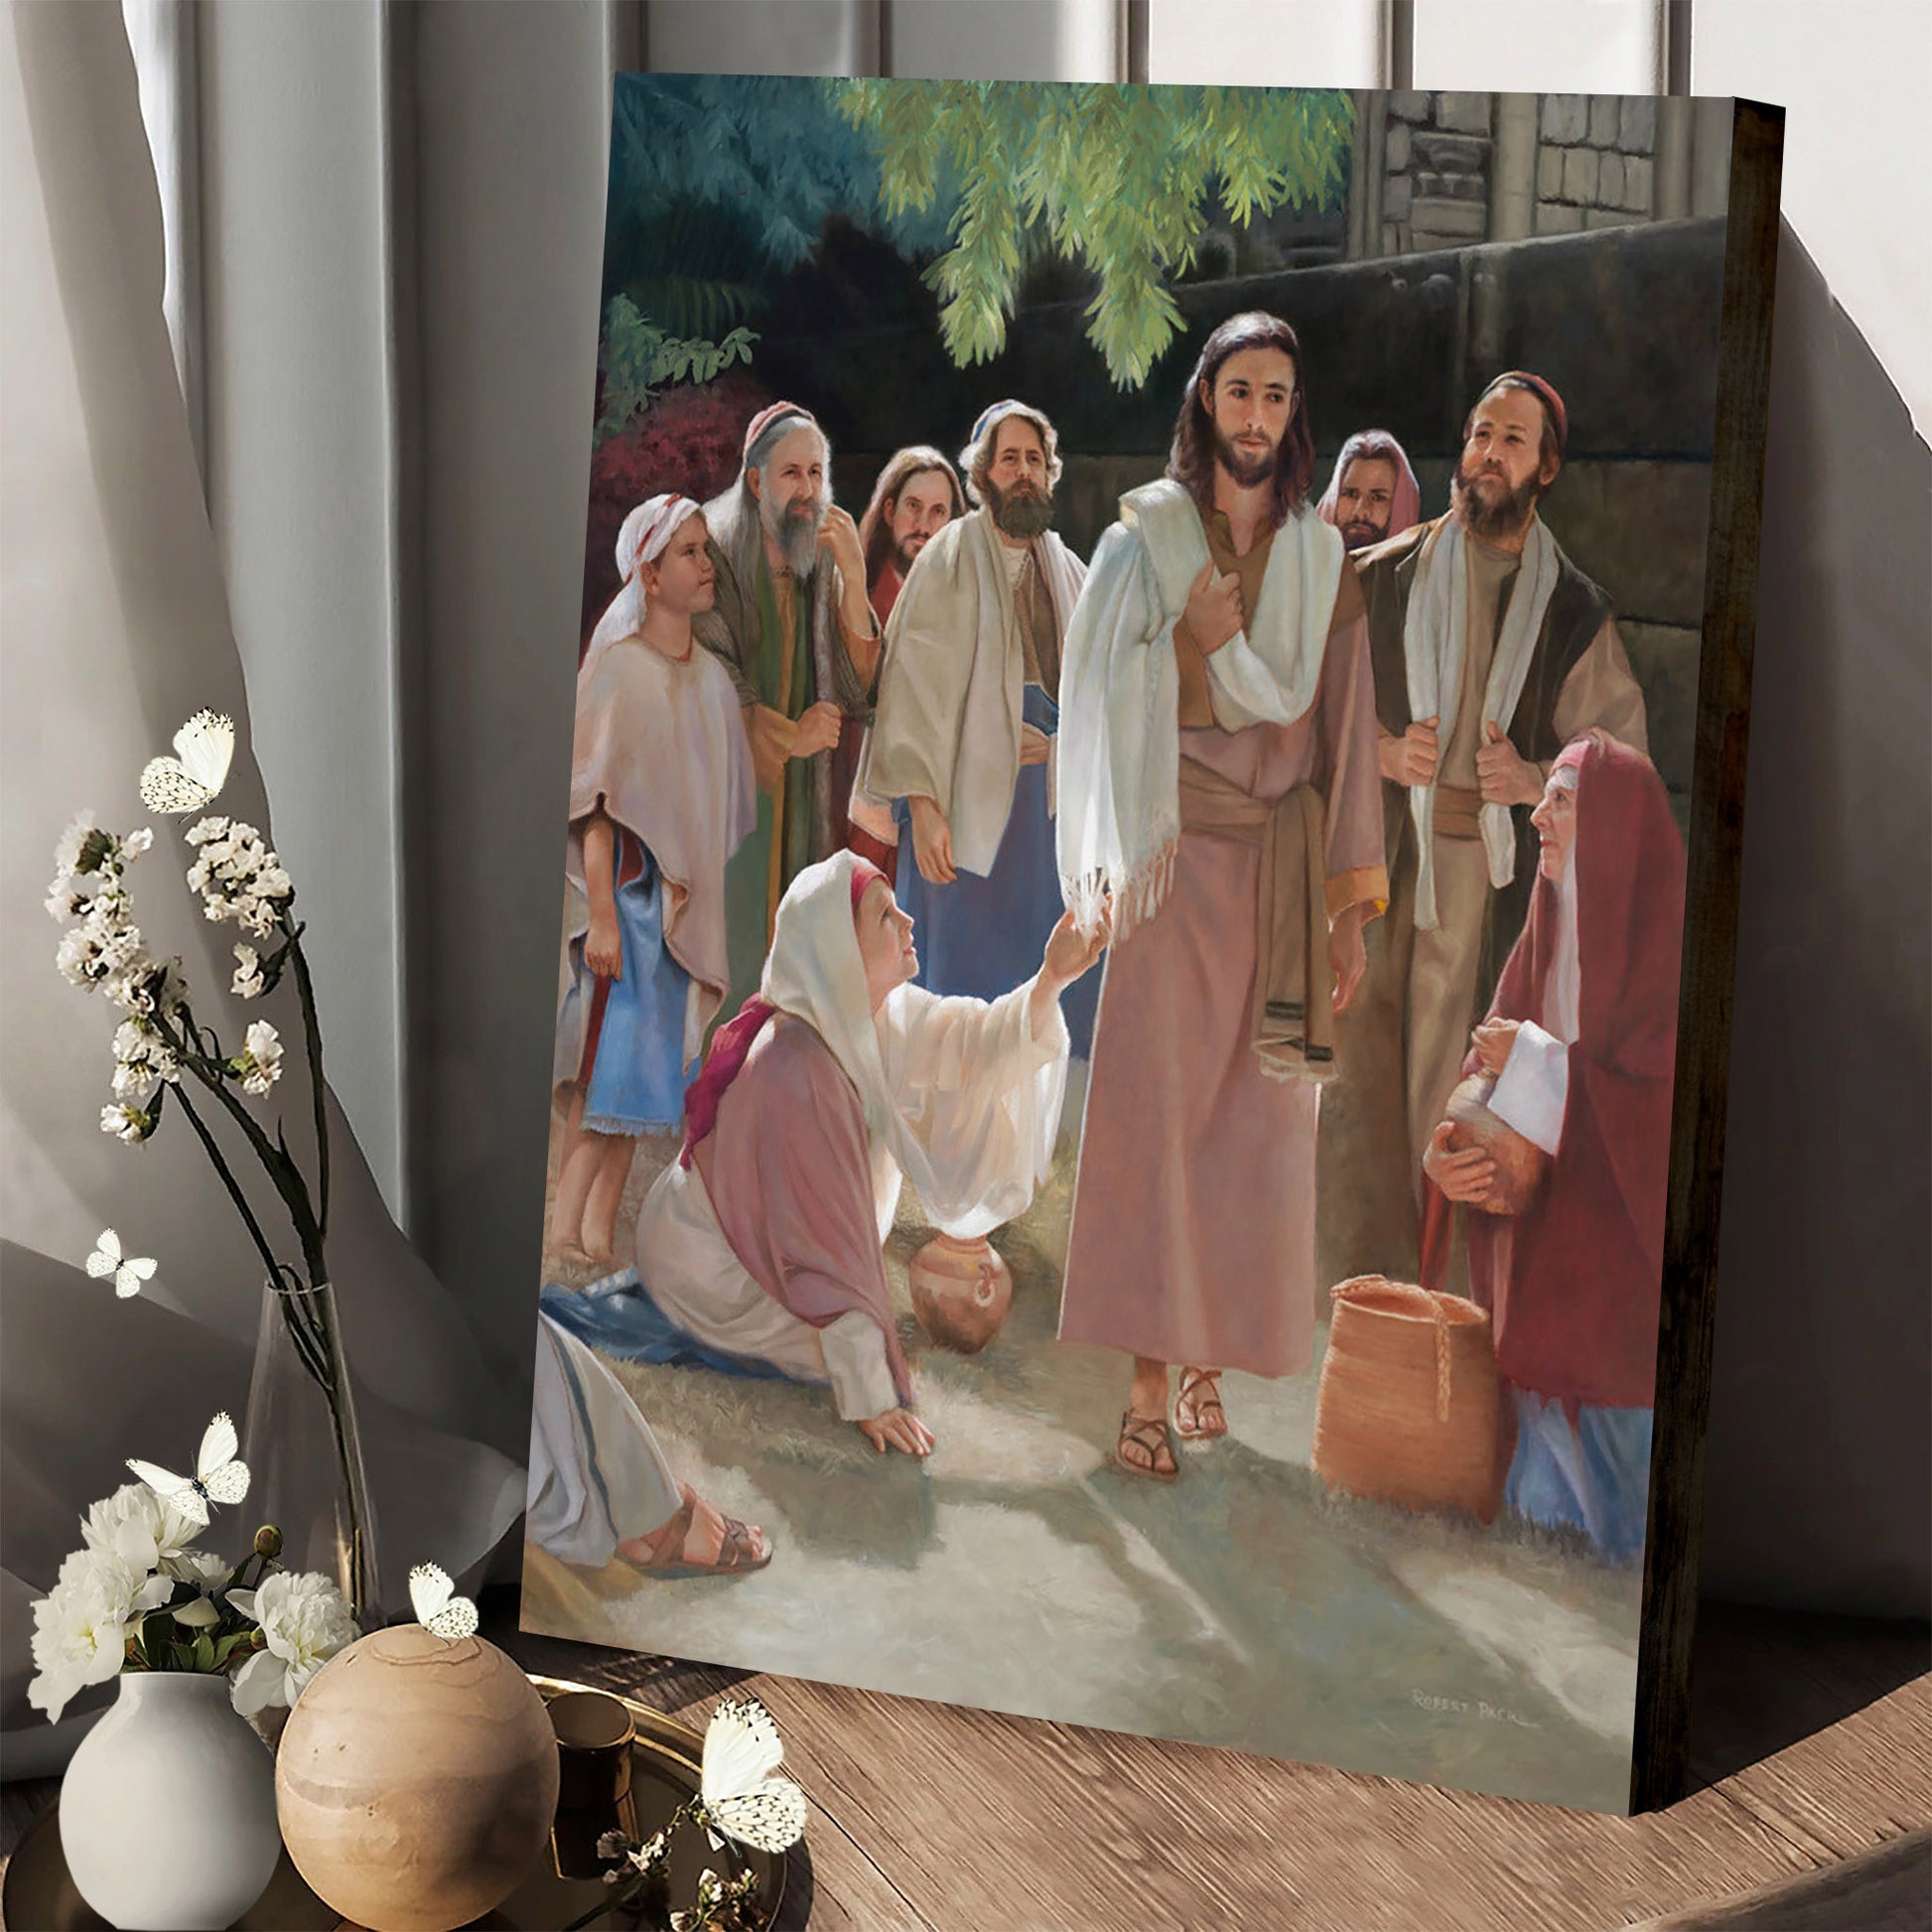 Healing In His Wings Canvas Wall Art - Jesus Canvas Pictures - Christian Canvas Wall Art